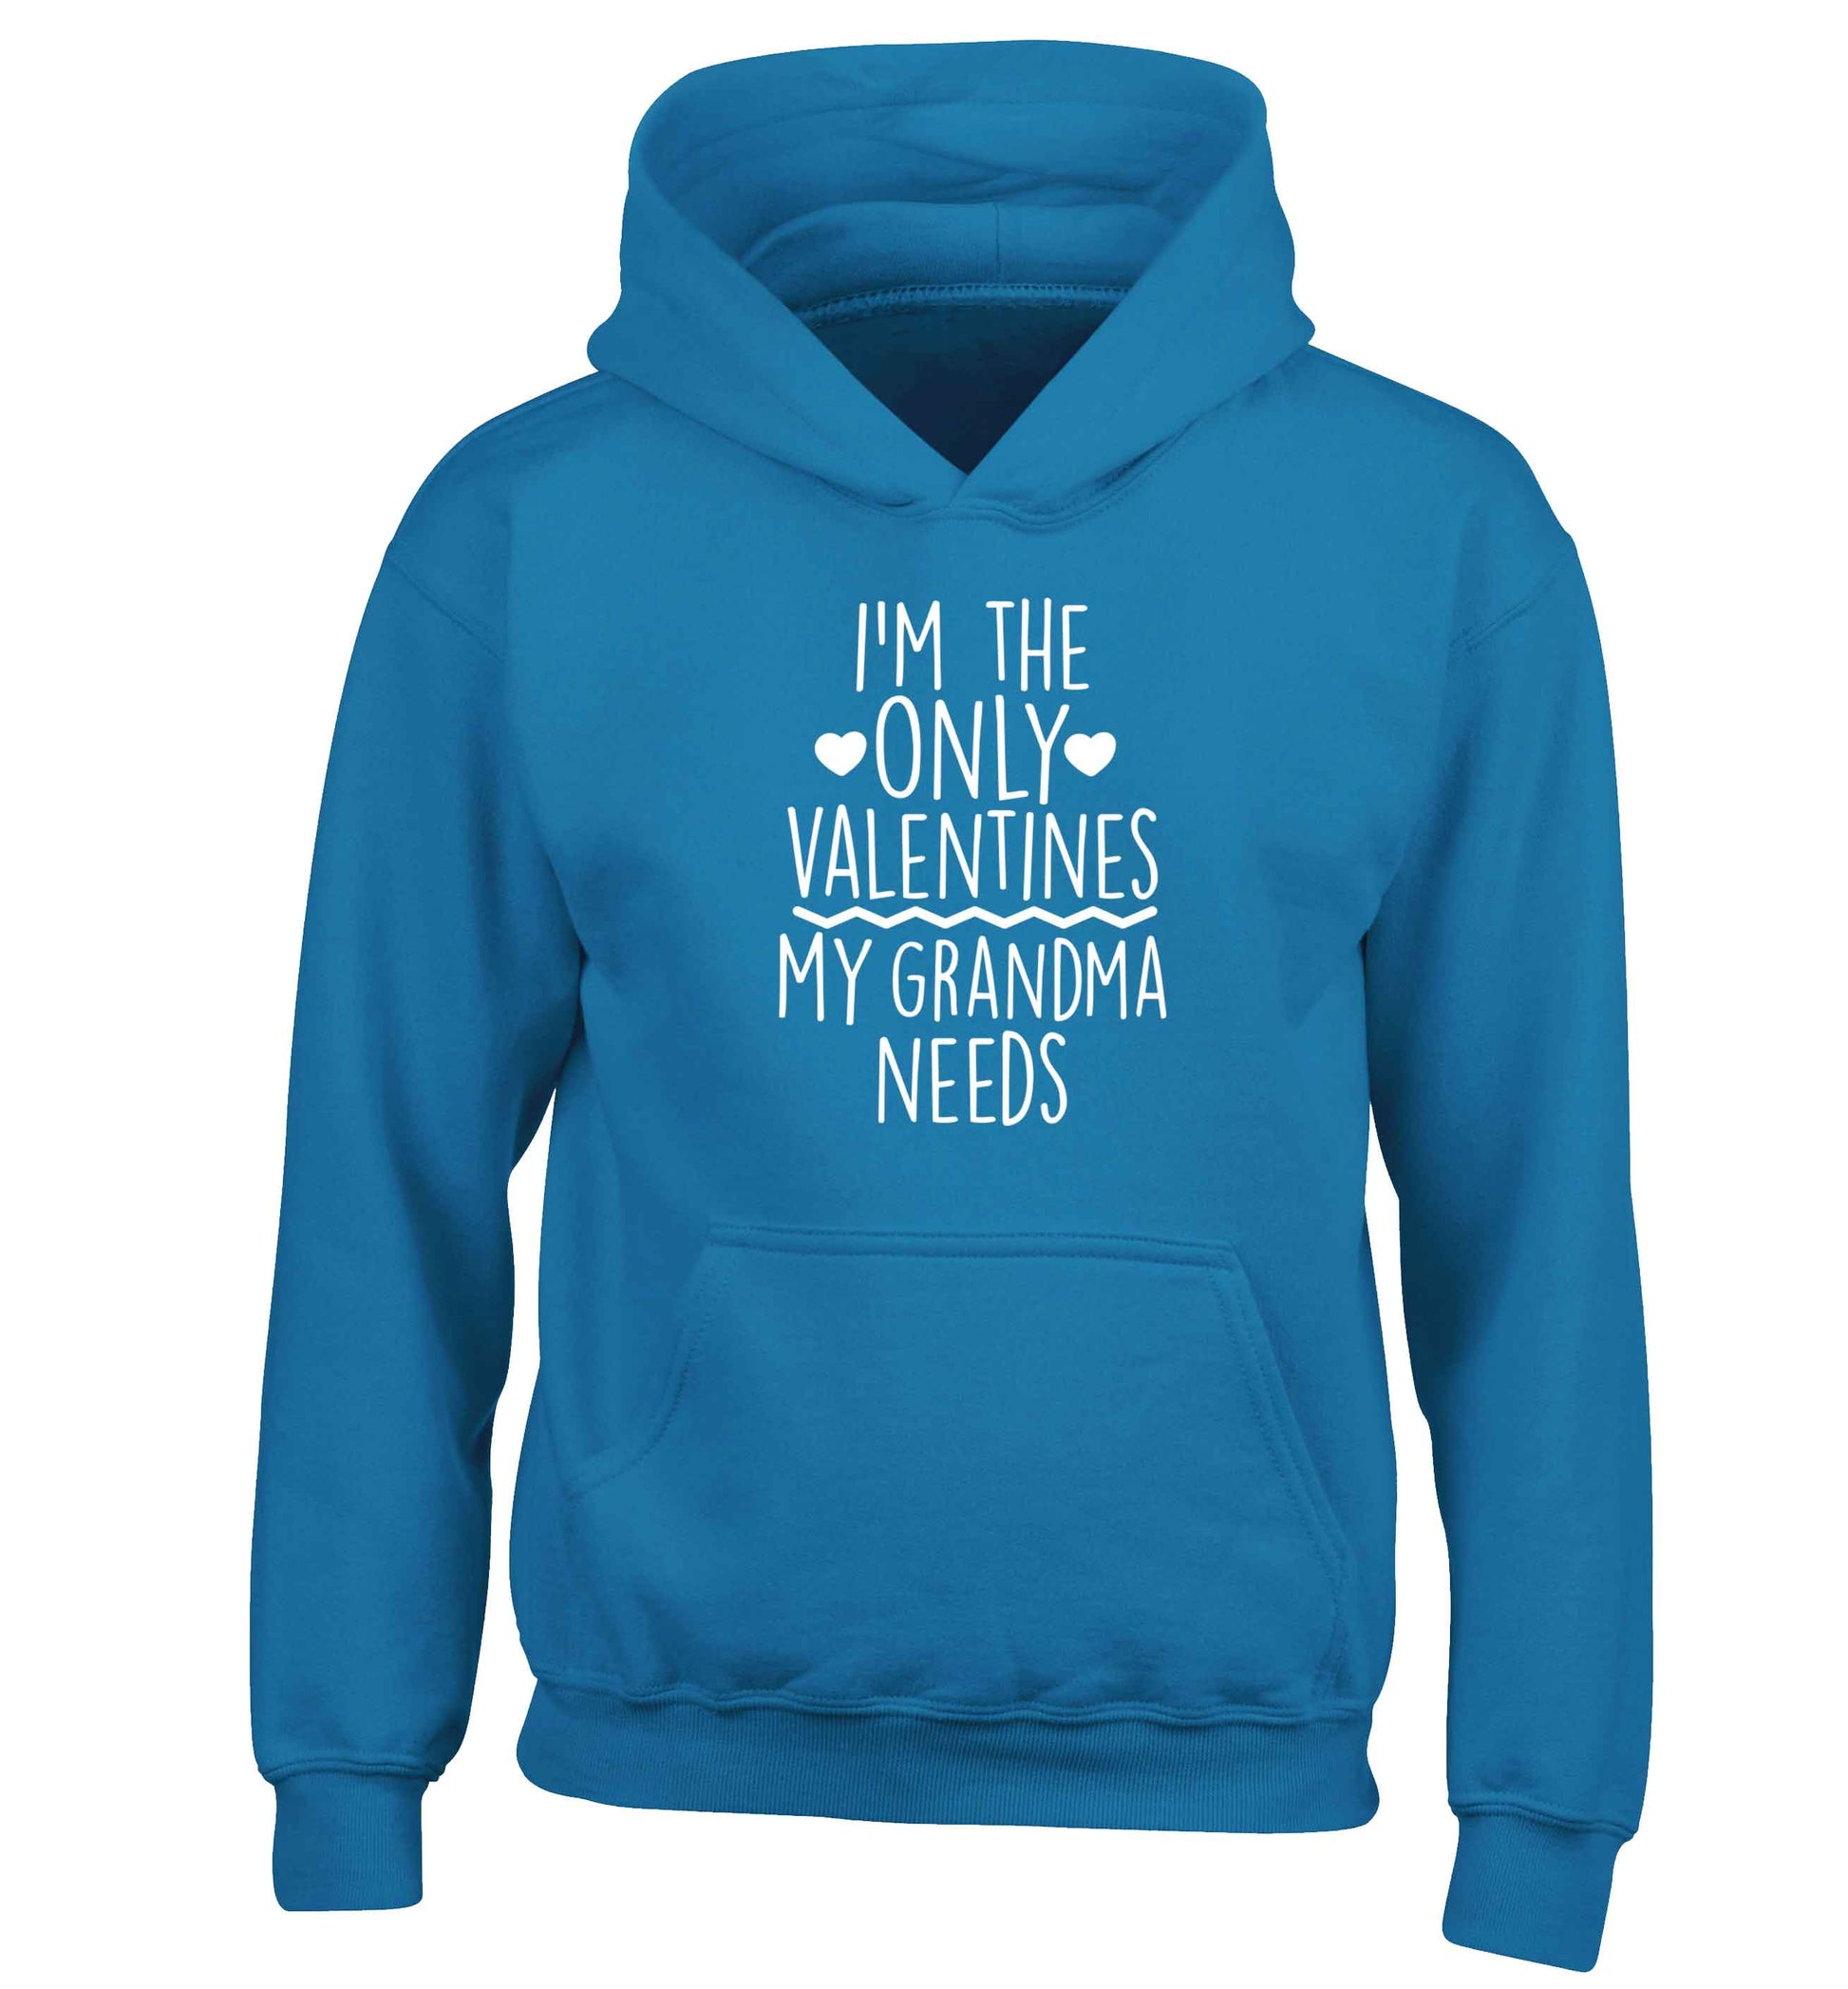 I'm the only valentines my grandma needs children's blue hoodie 12-13 Years